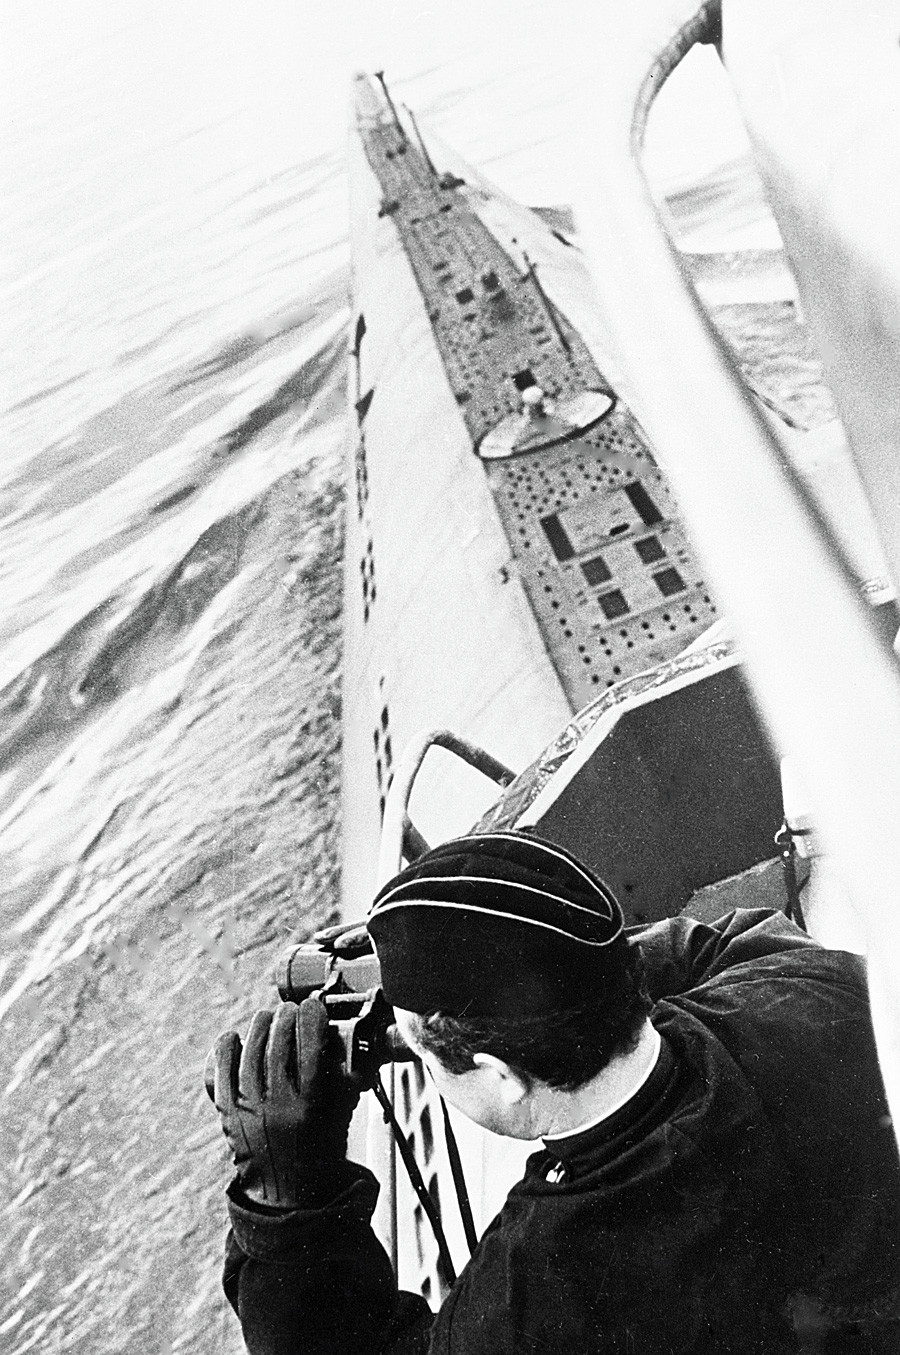 Soviet submarine commander scans the horizon through binoculars in 1968